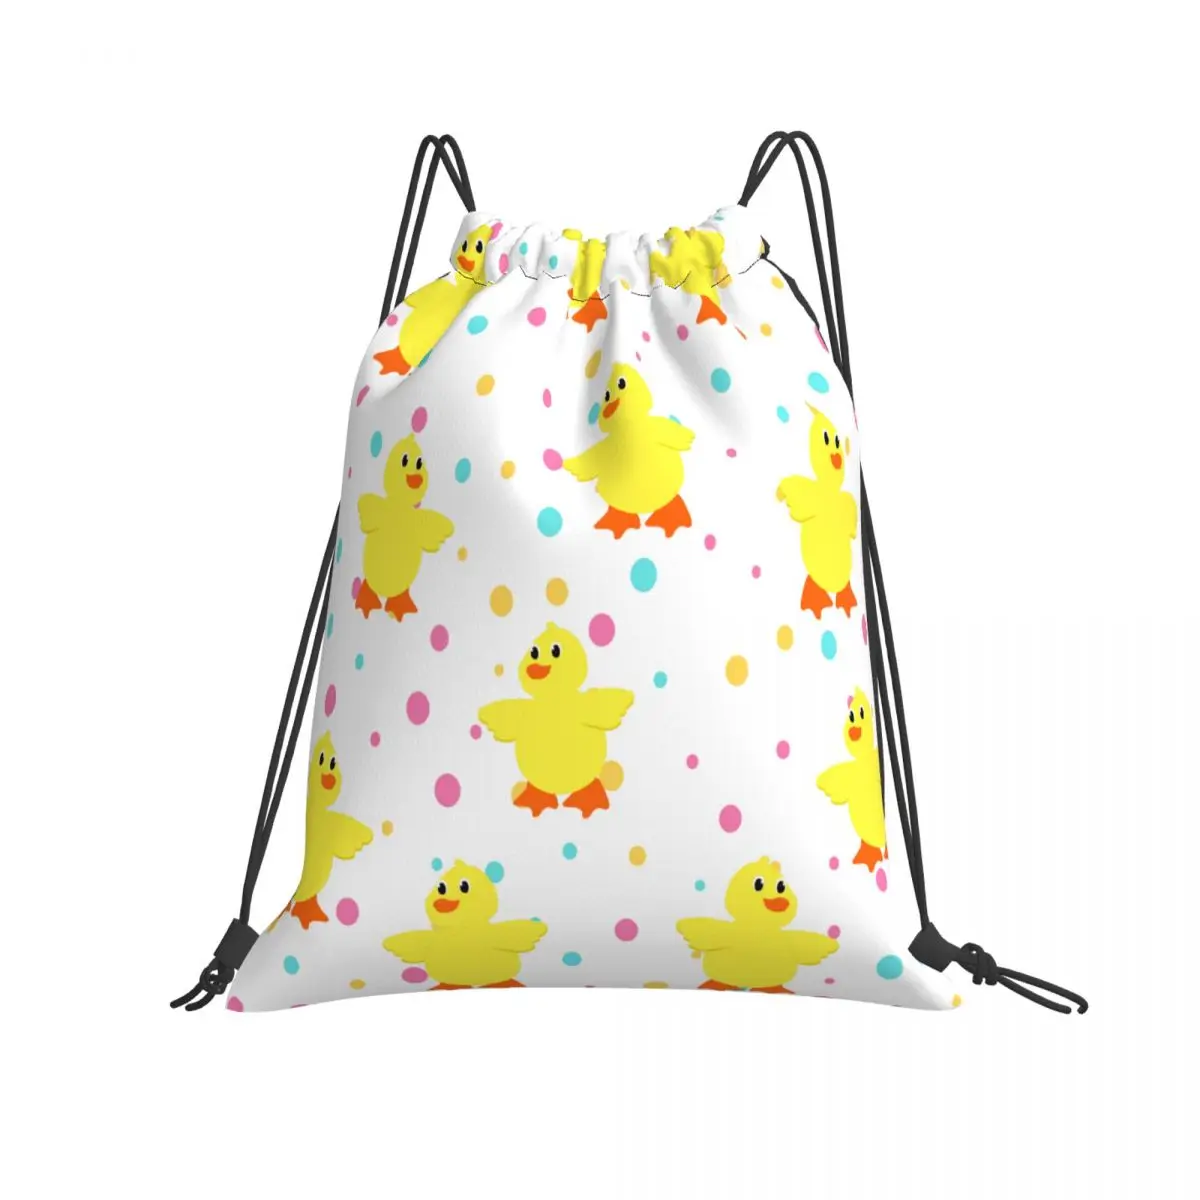 Drawstring Bag Cute Ducks With Polka Dot Foldable Gym Bag Fitness Backpack Hiking Camping Swimming Sports Bag